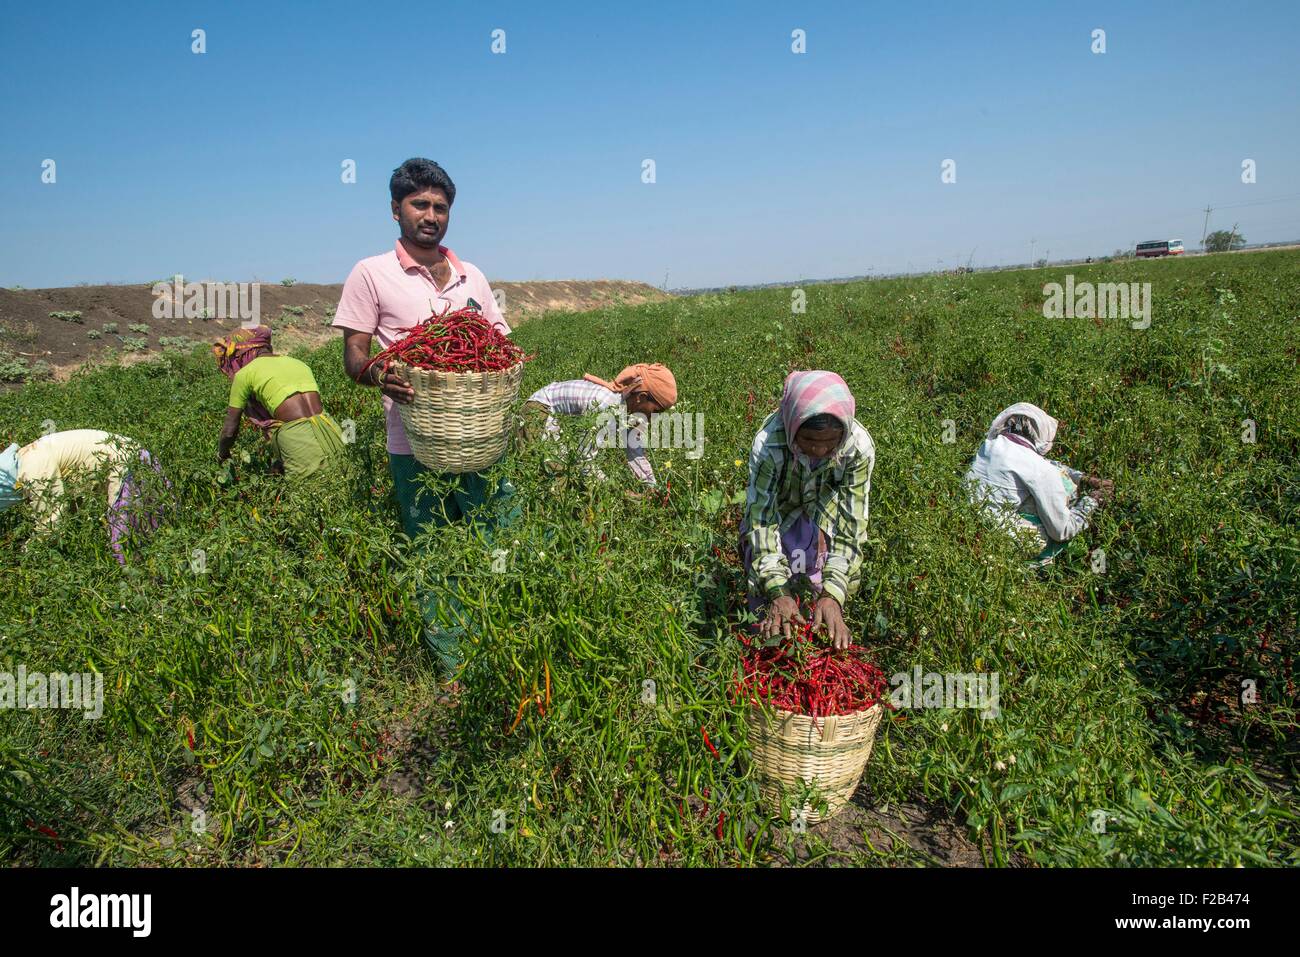 Indian farmers harvest chili peppers in a field June 18, 2015 at Gabbur, district Raichur, Karnataka, India. Stock Photo